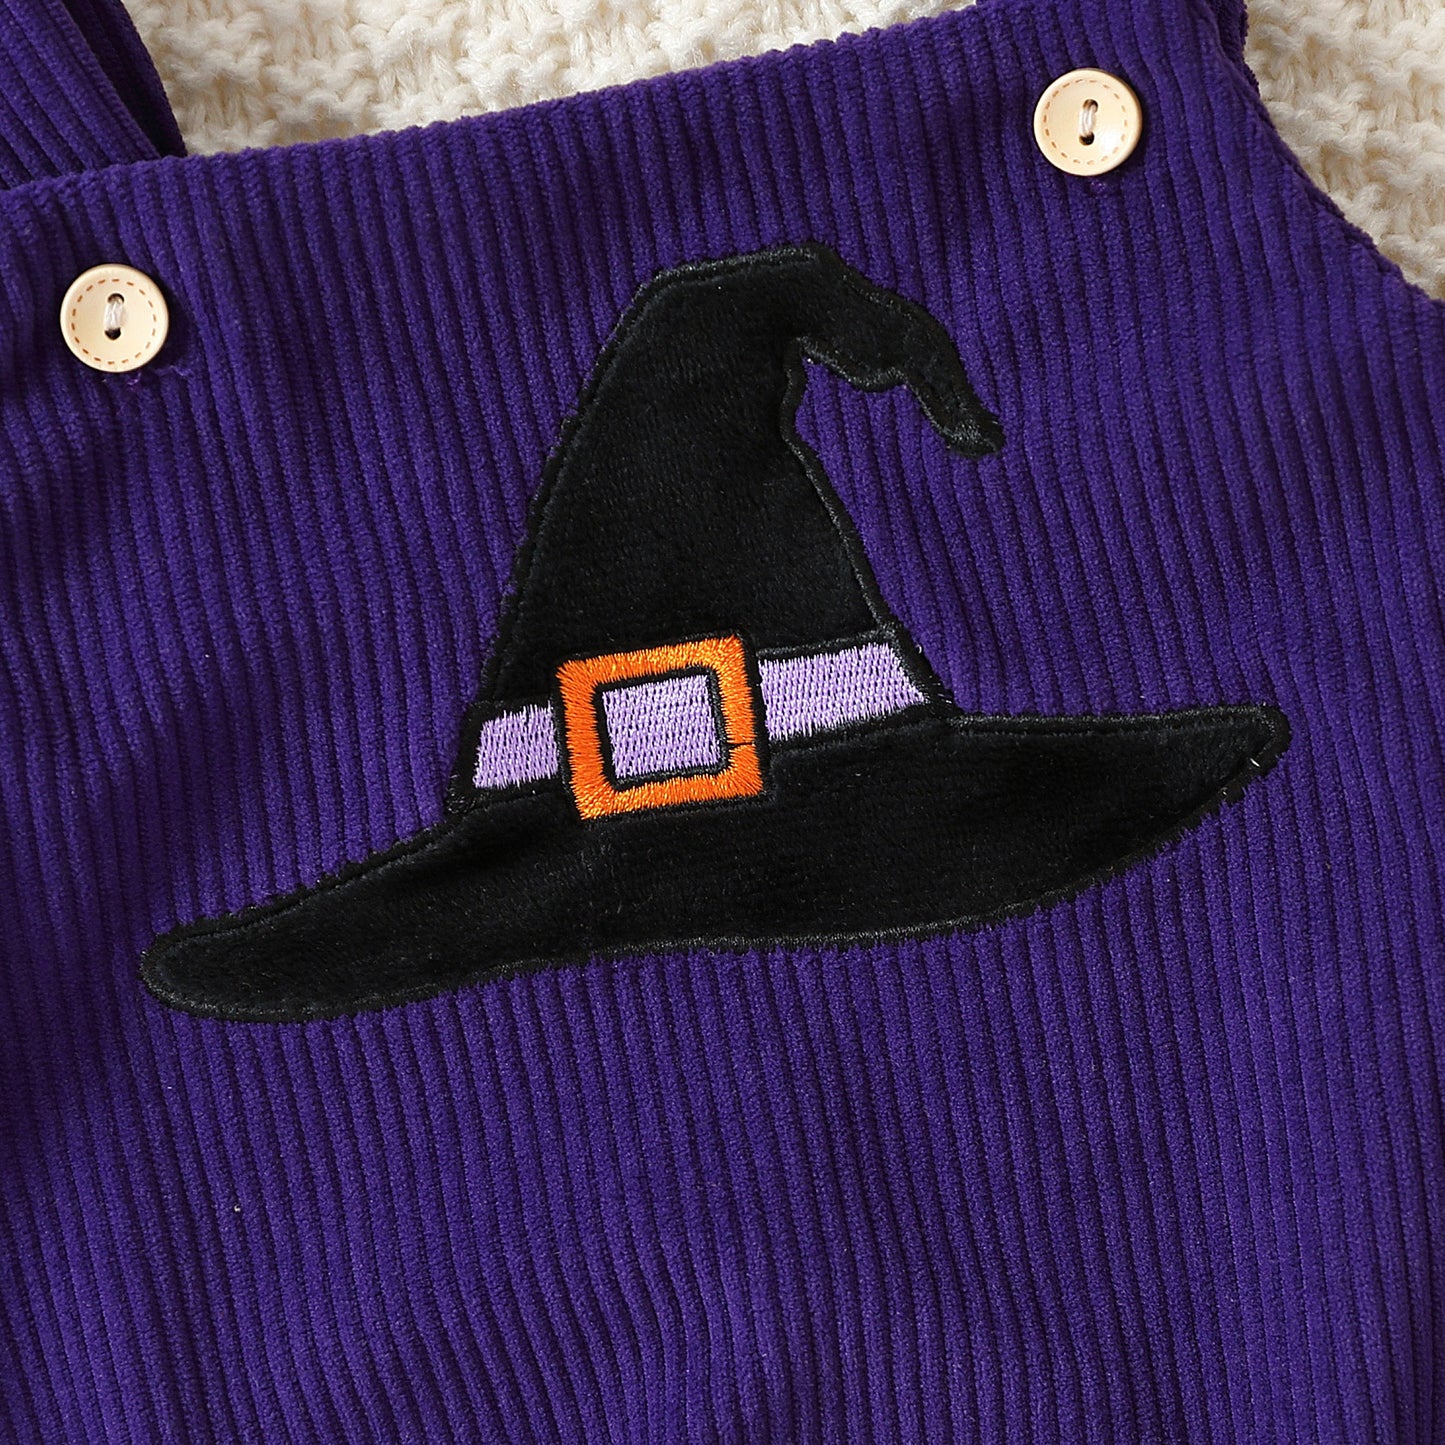 Fall in love with Autumn Corduroy Halloween jumper ghost pumpkin hat